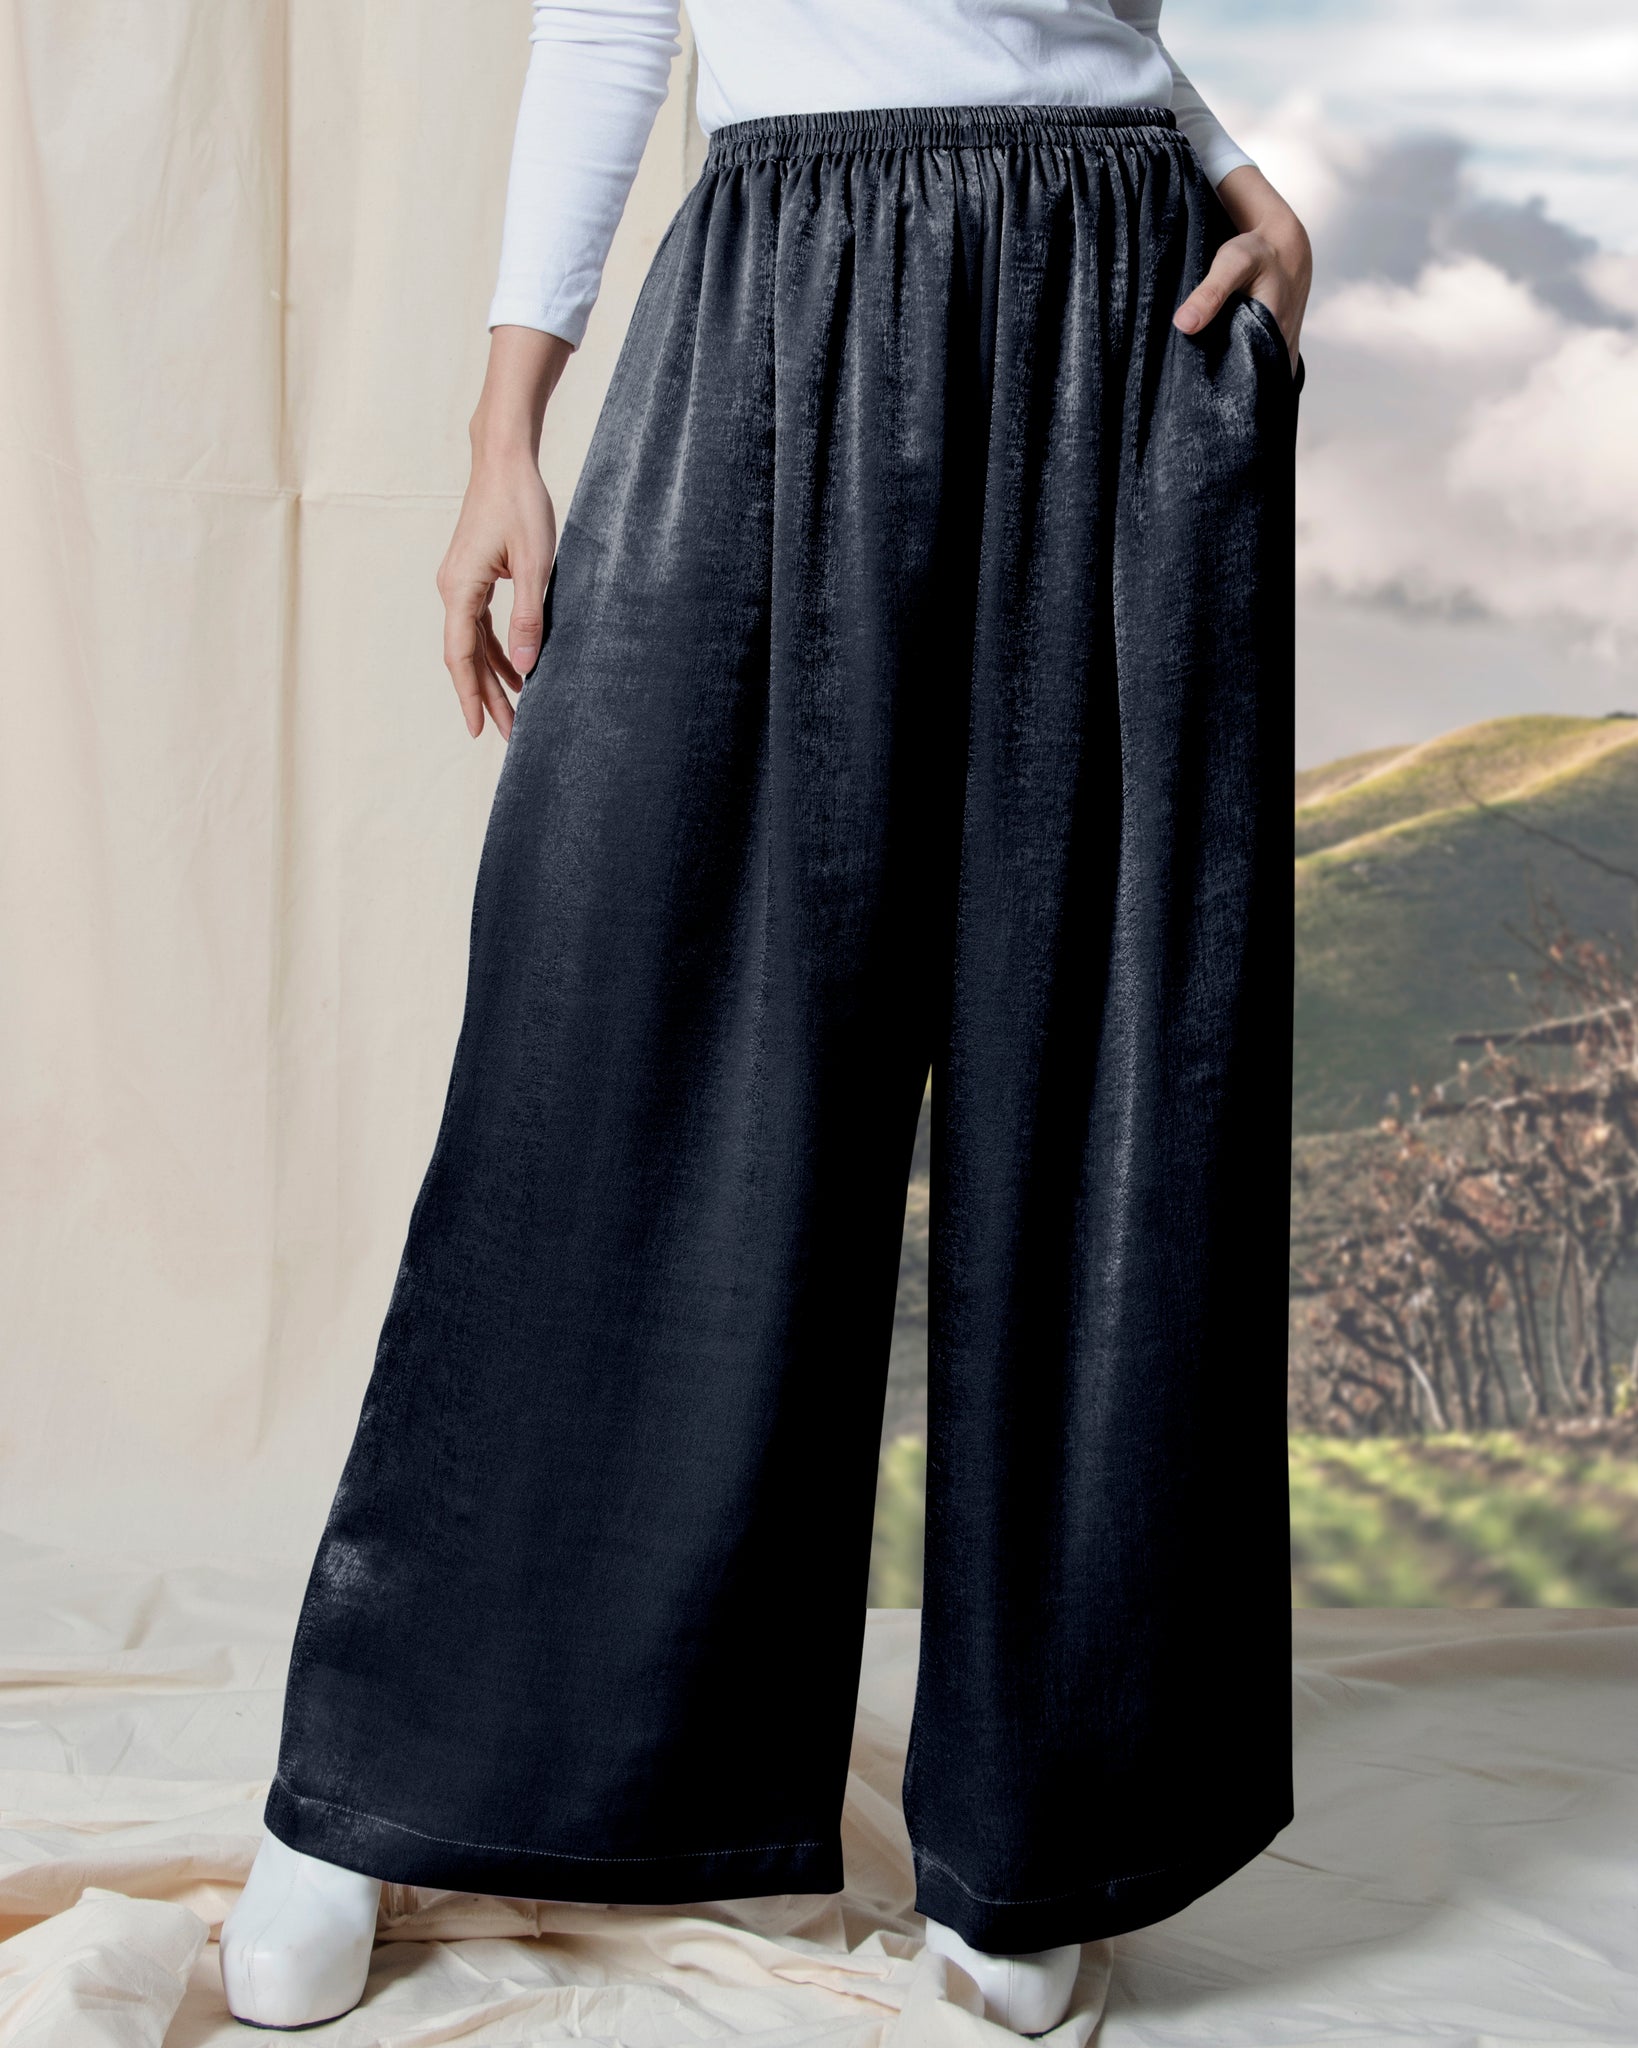 ARJANA Dreamy Pants (Pants for Telekung) - 5 Colours Selection